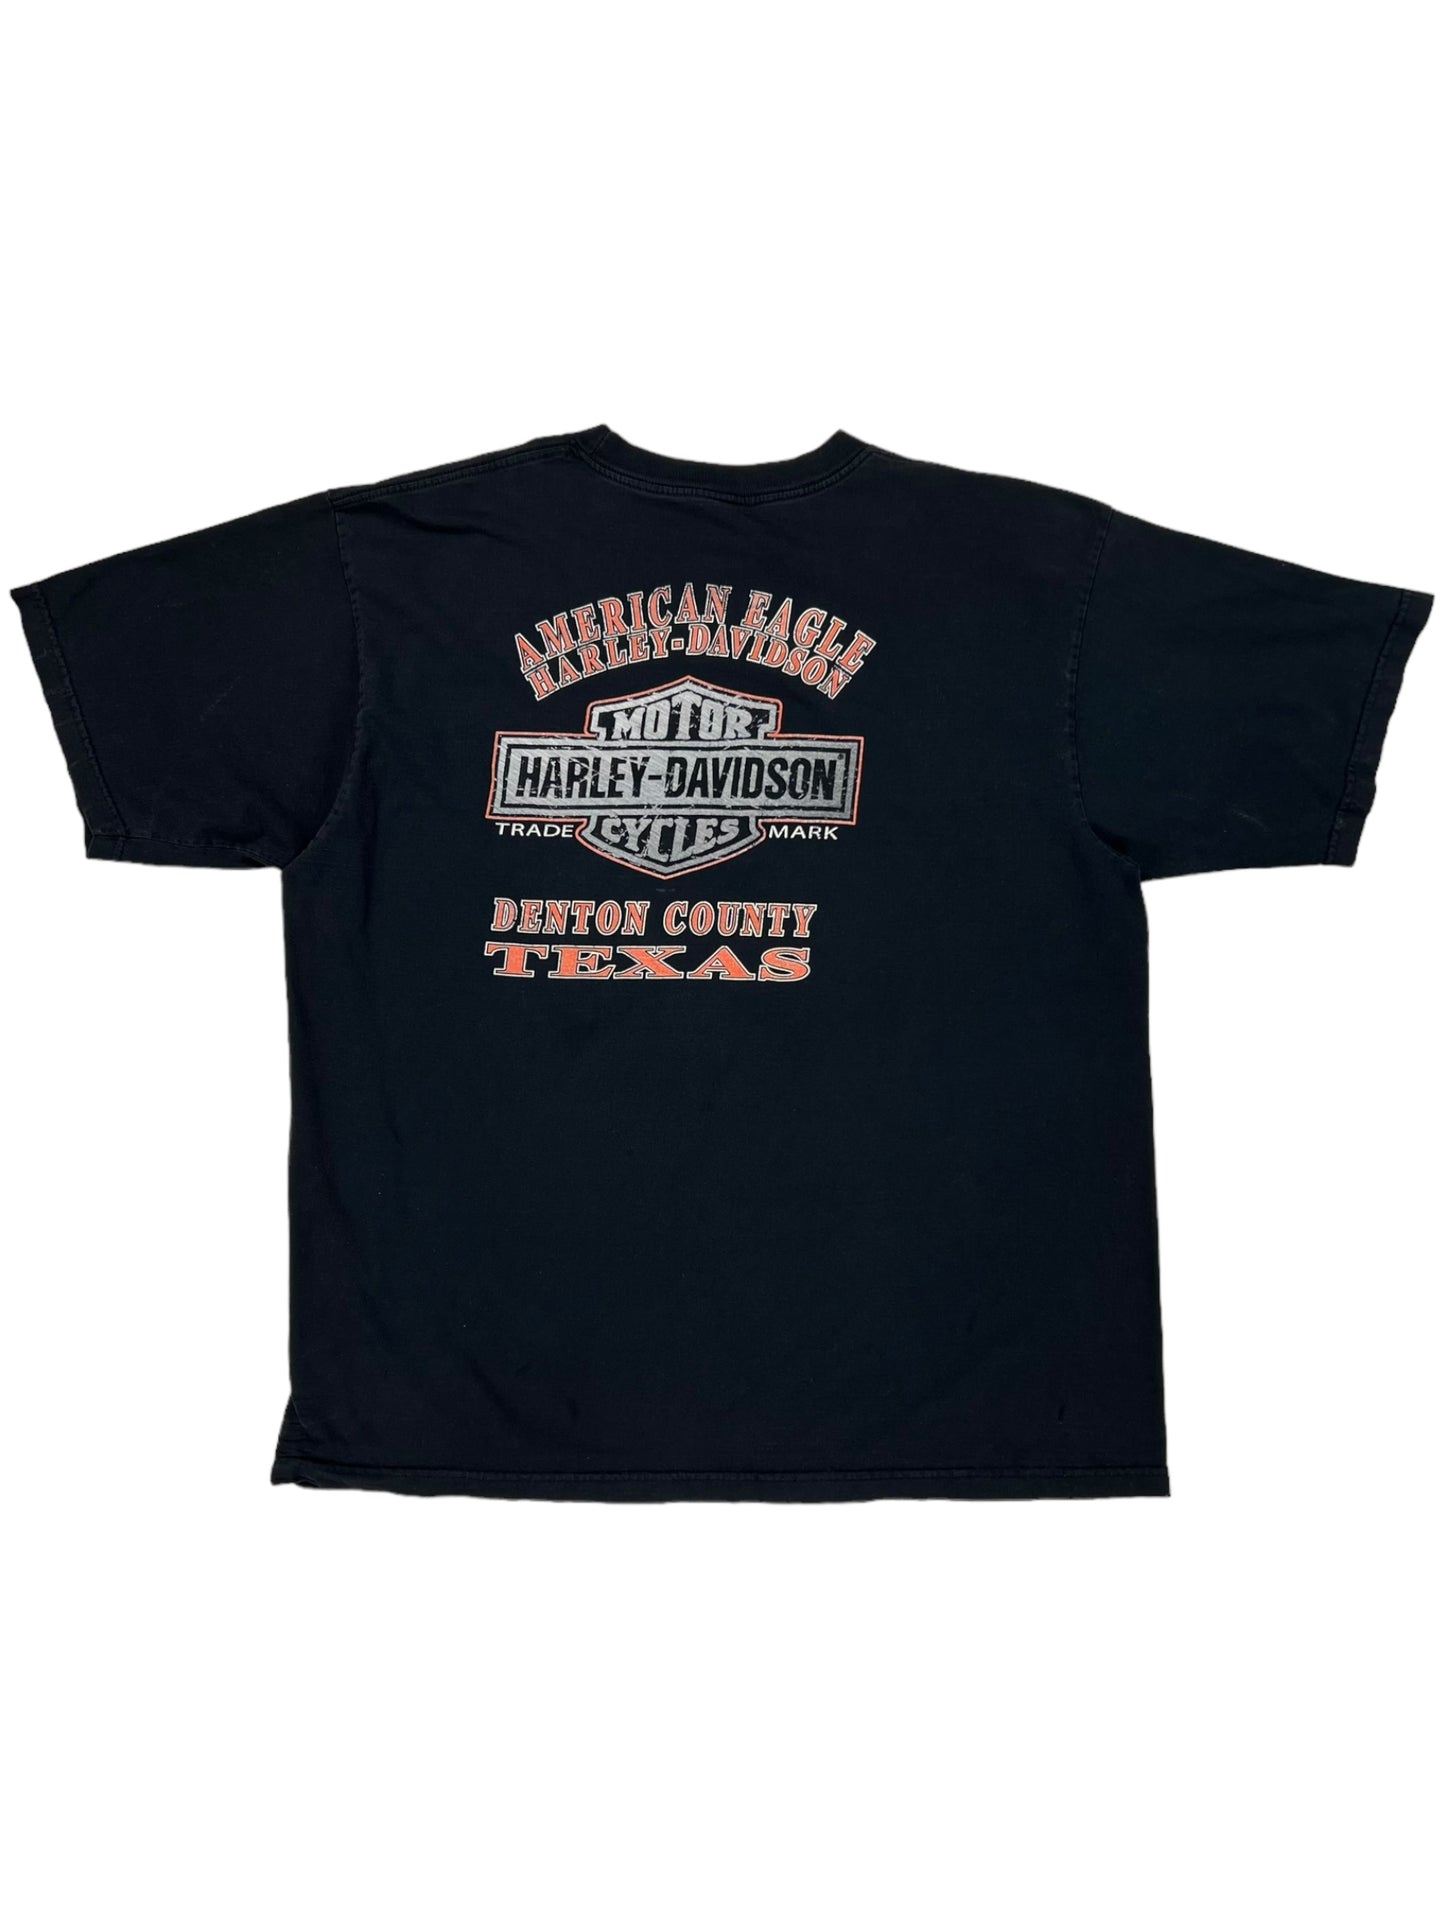 2007 Harley Davidson Motorcycles flames tee (XL)